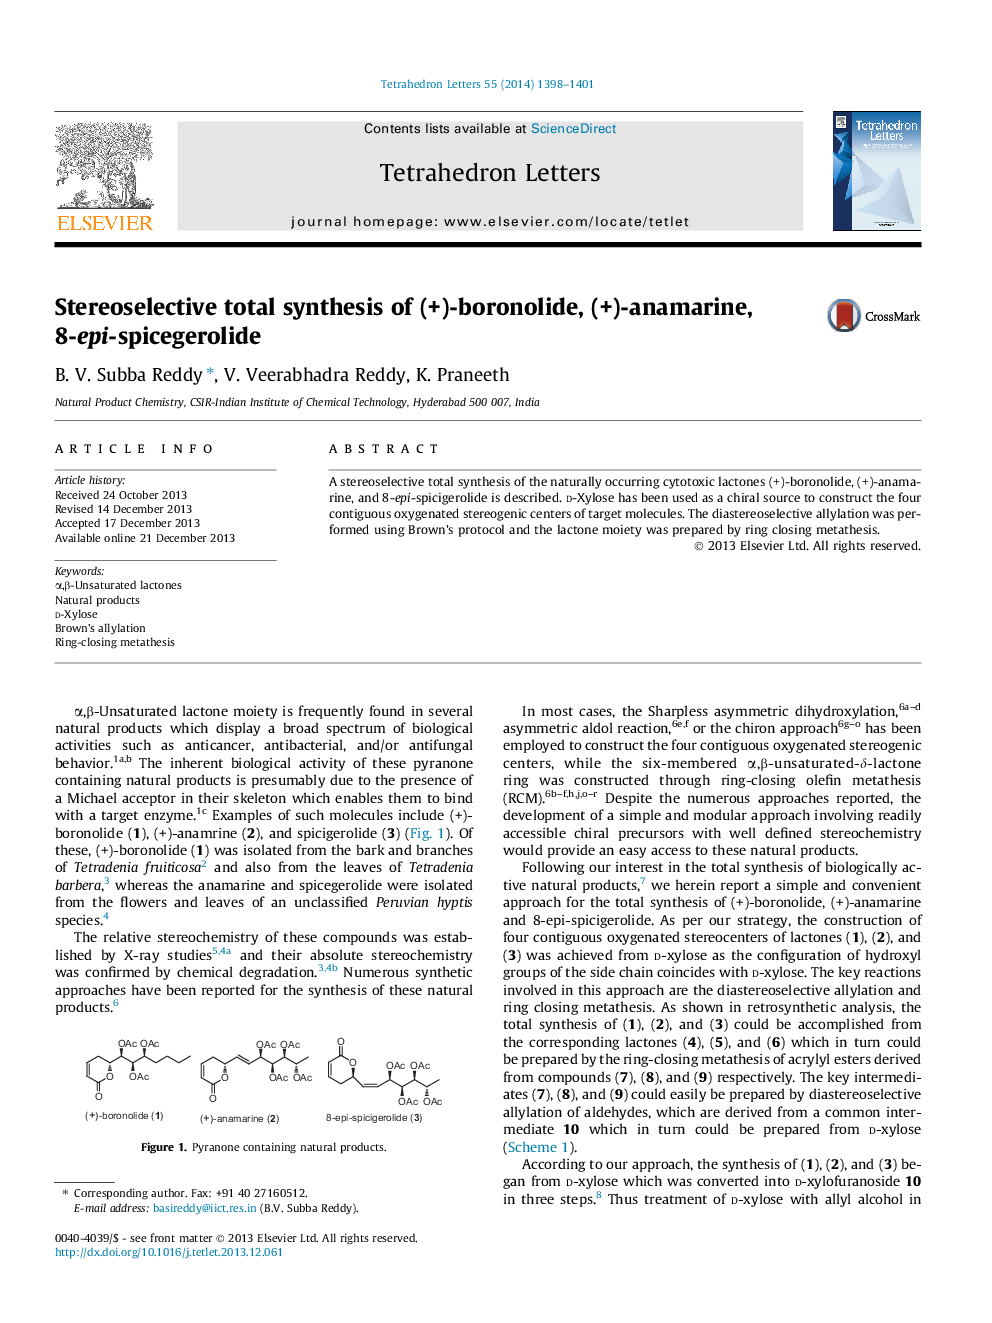 Stereoselective total synthesis of (+)-boronolide, (+)-anamarine, 8-epi-spicegerolide